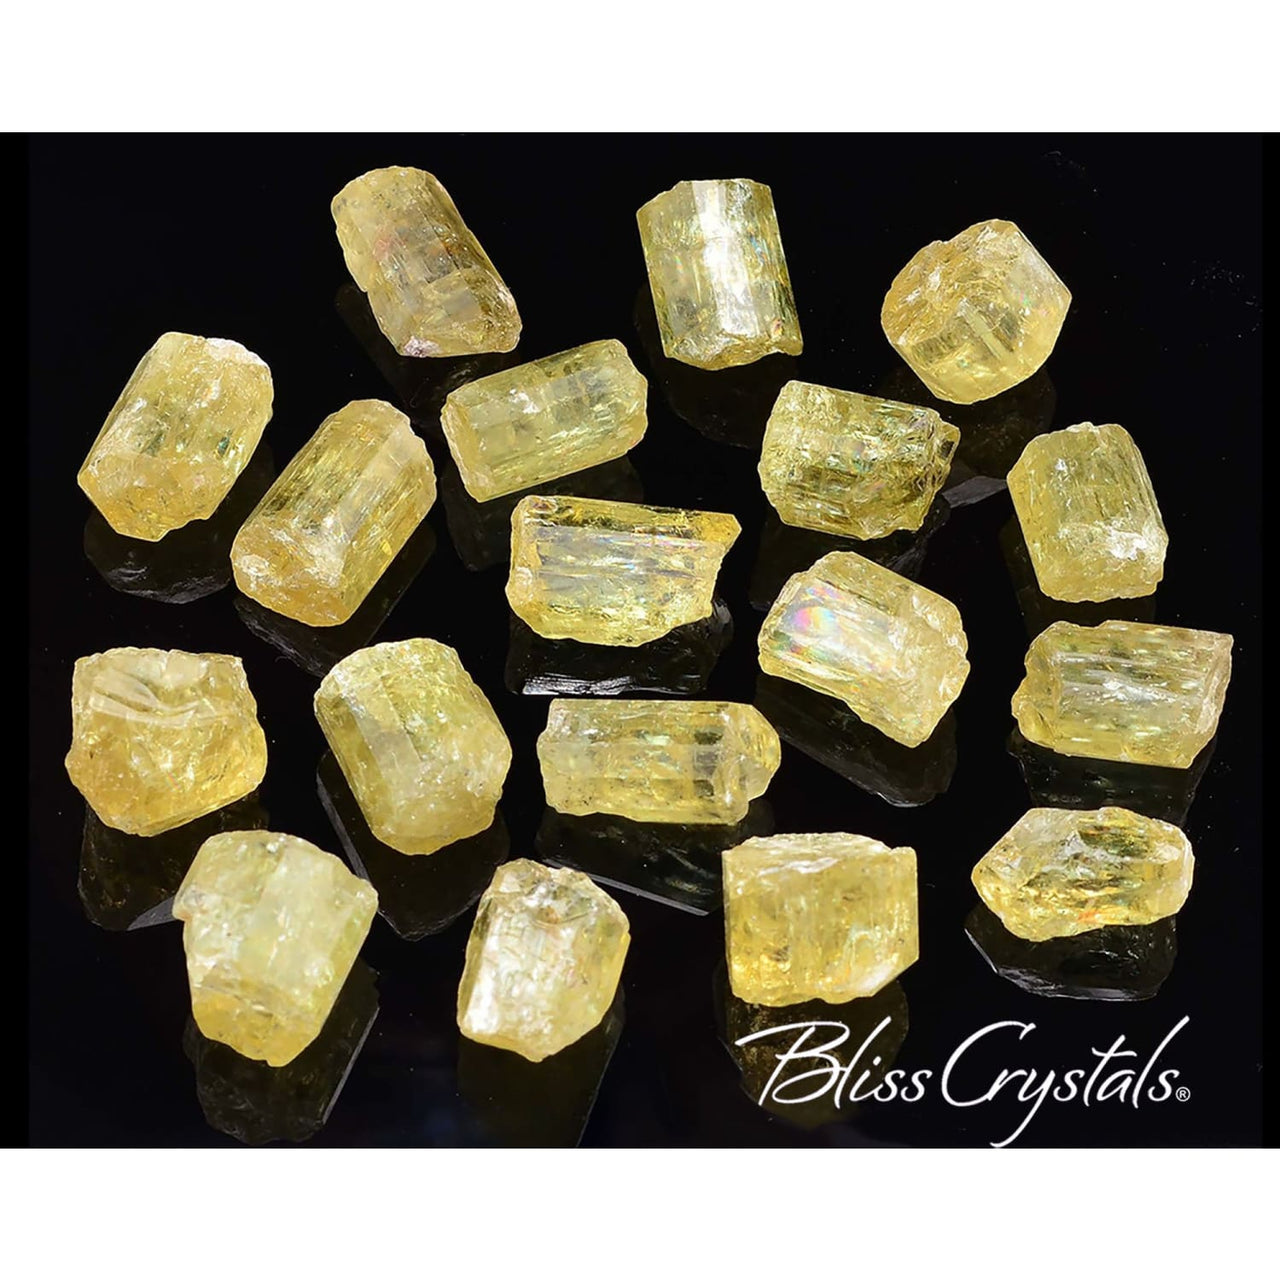 1 YELLOW APATITE Rough Crystal 5 - 6 gm Medium Size (25-30 